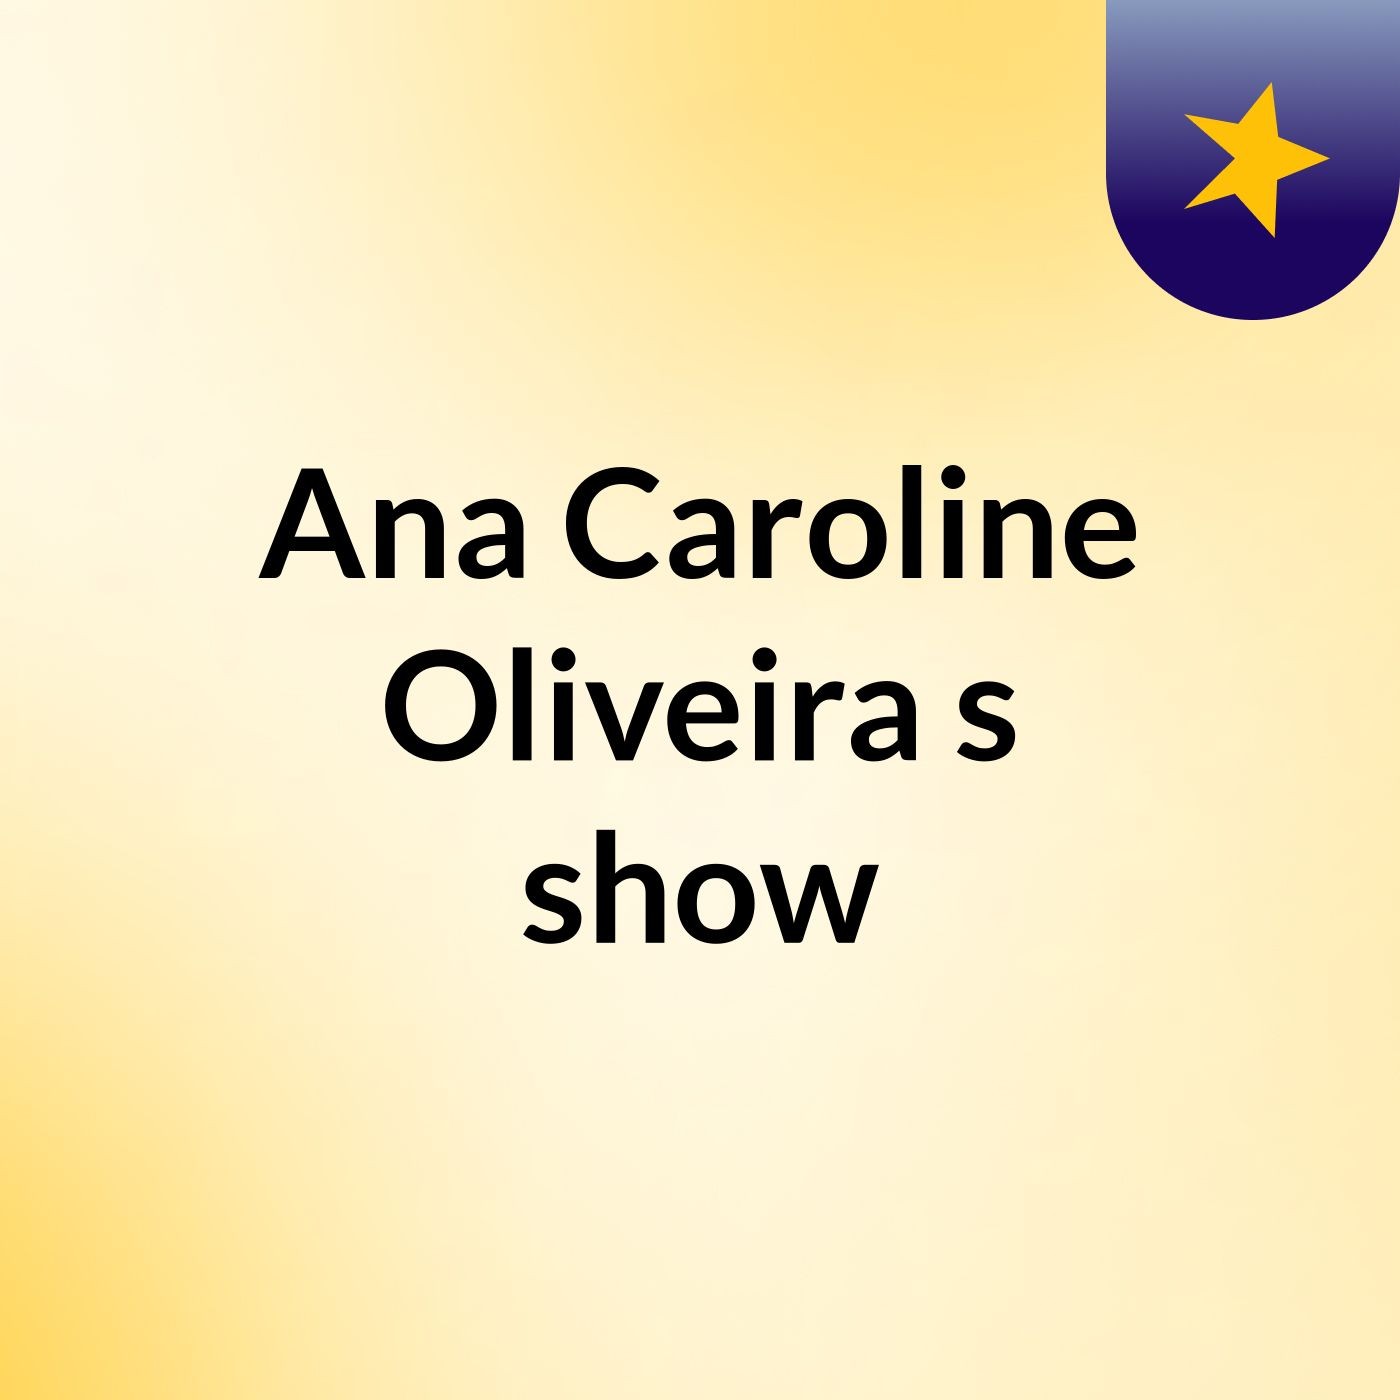 Ana Caroline Oliveira's show